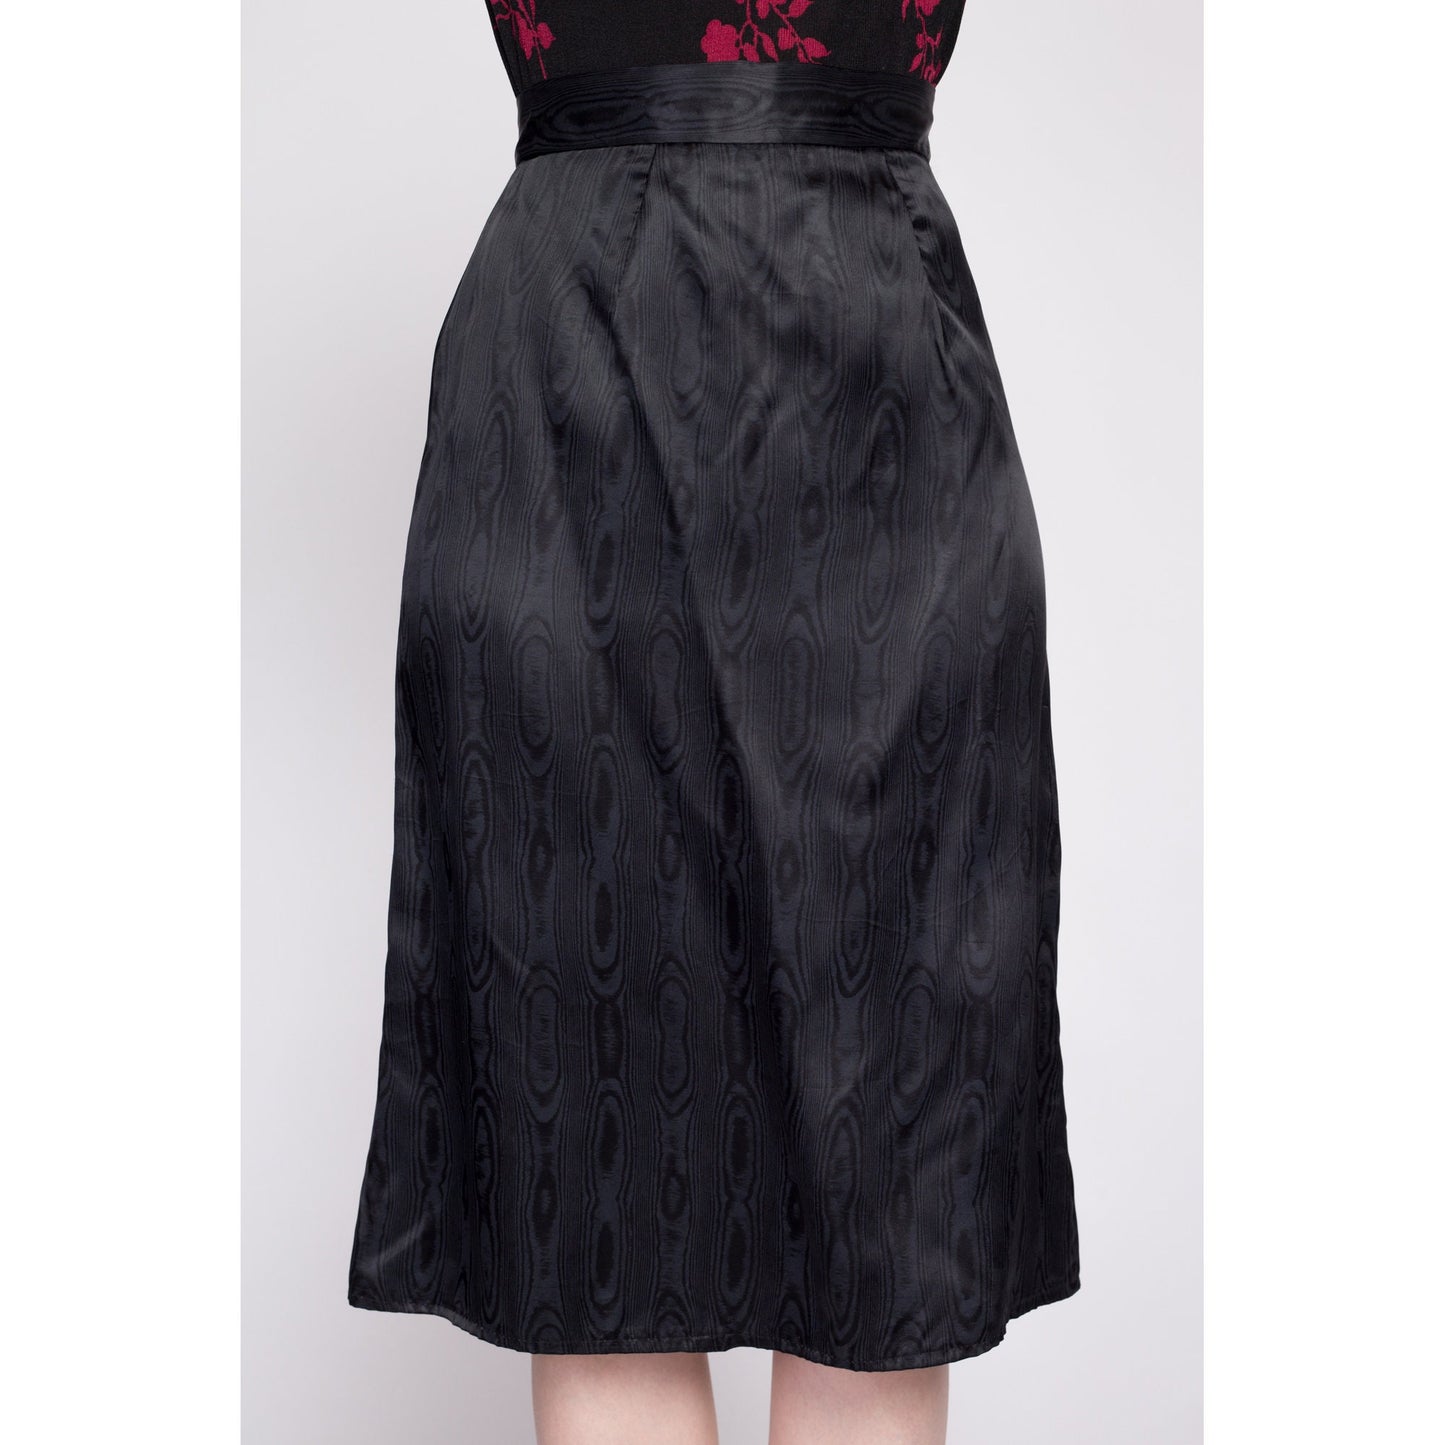 70s Black Wood Grain Satin Skirt - Extra Small, 24" | Vintage High Waisted A Line Minimalist Skirt